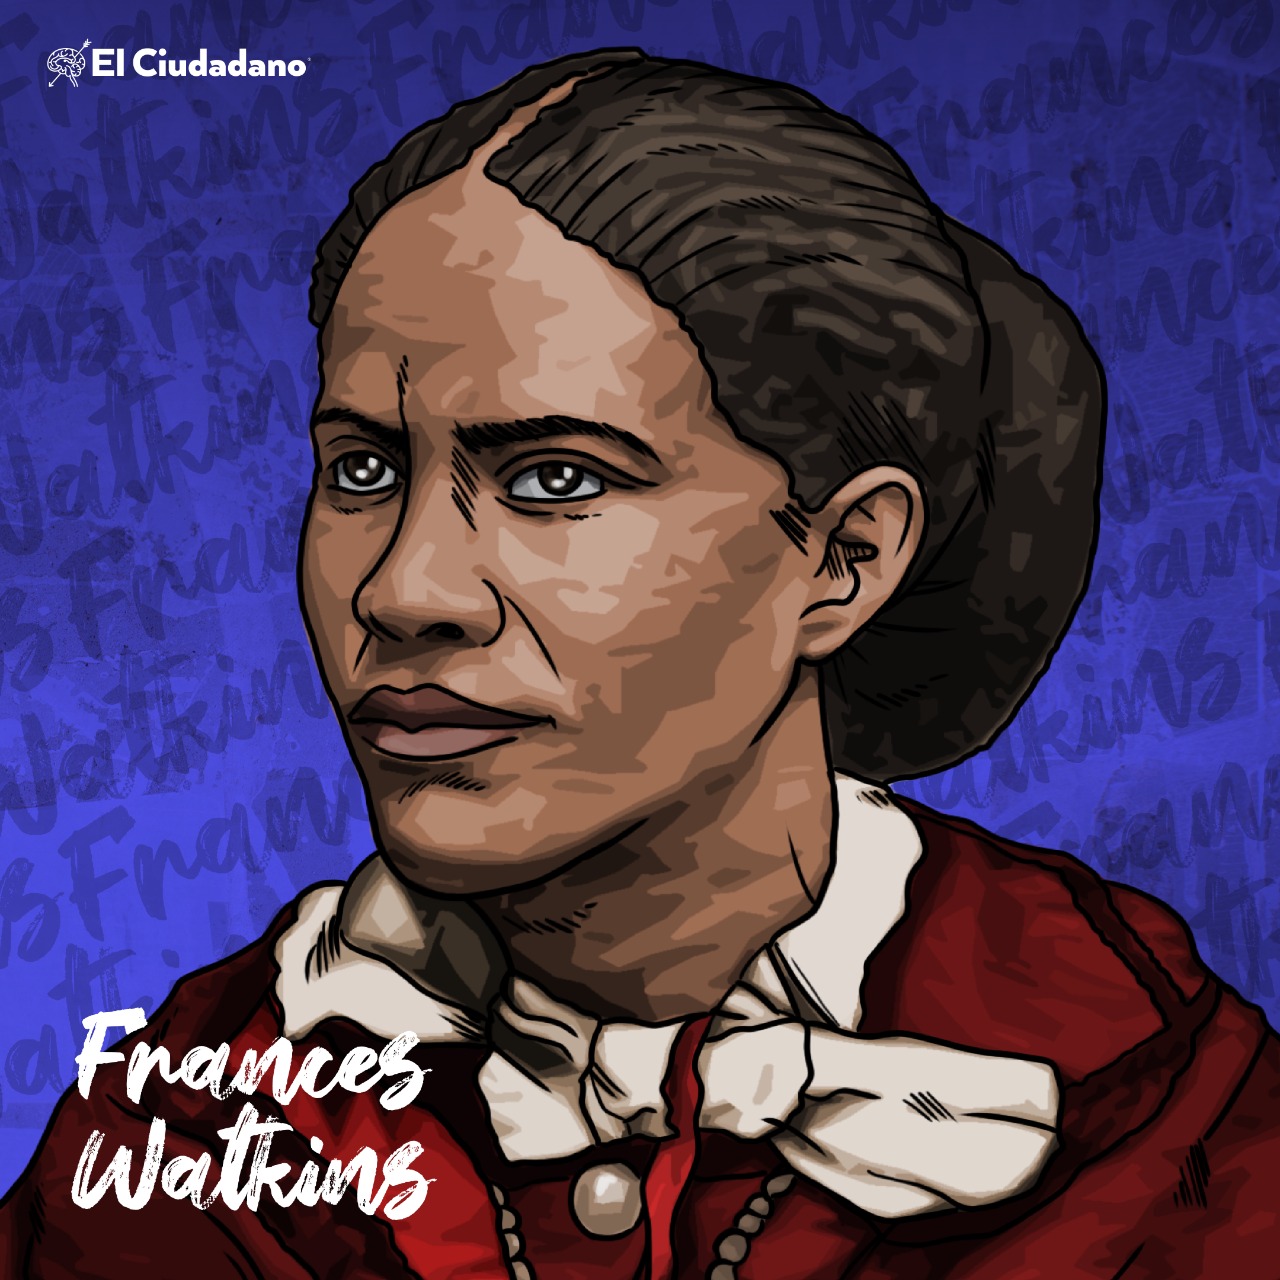 Frances Watkins